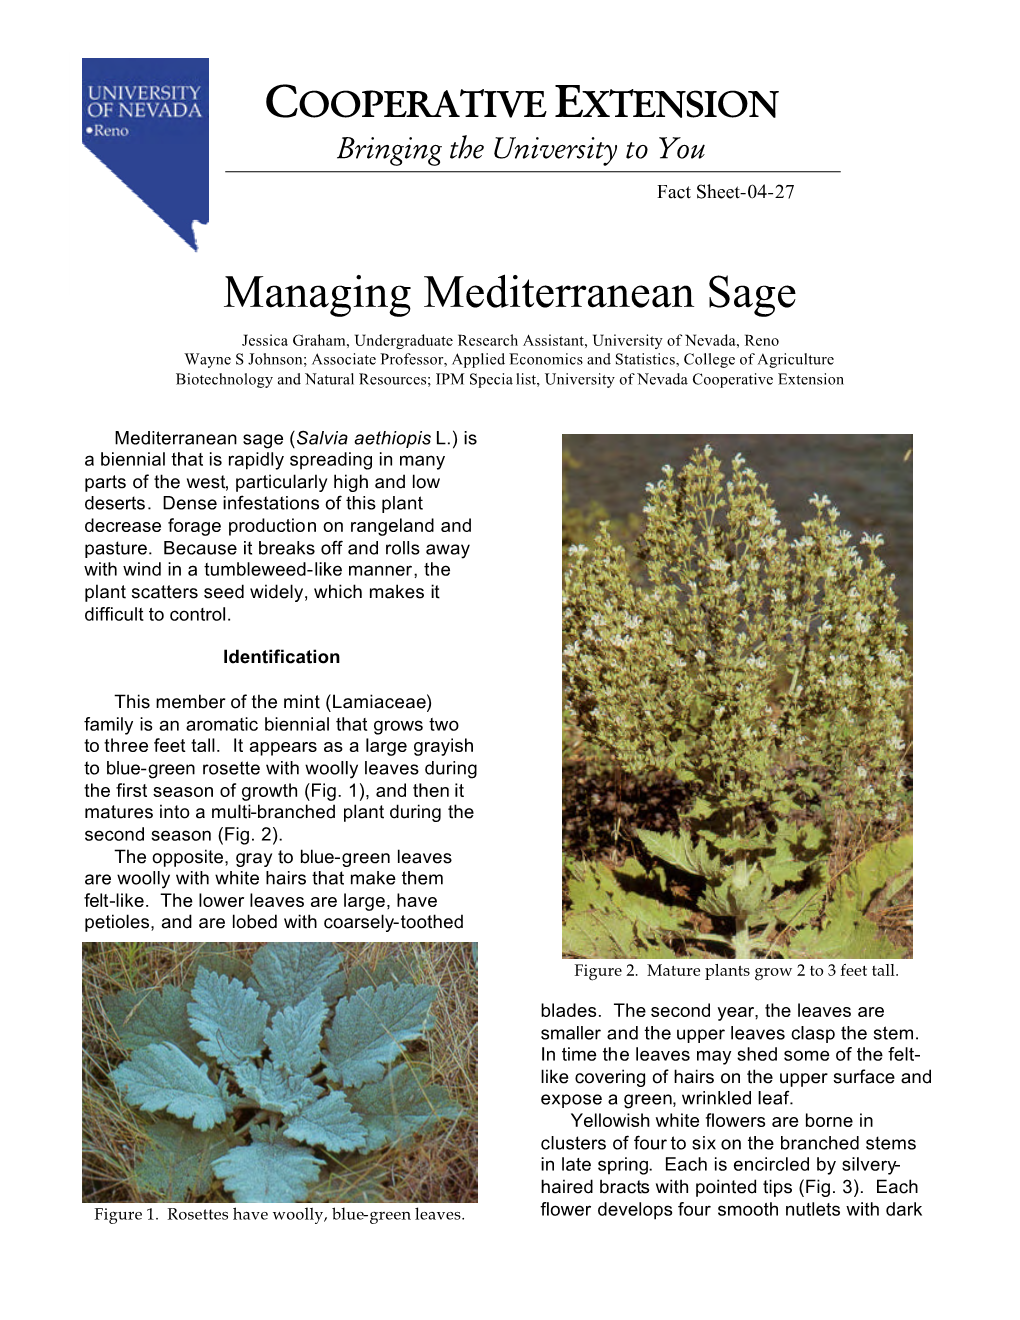 Managing Mediterranean Sage